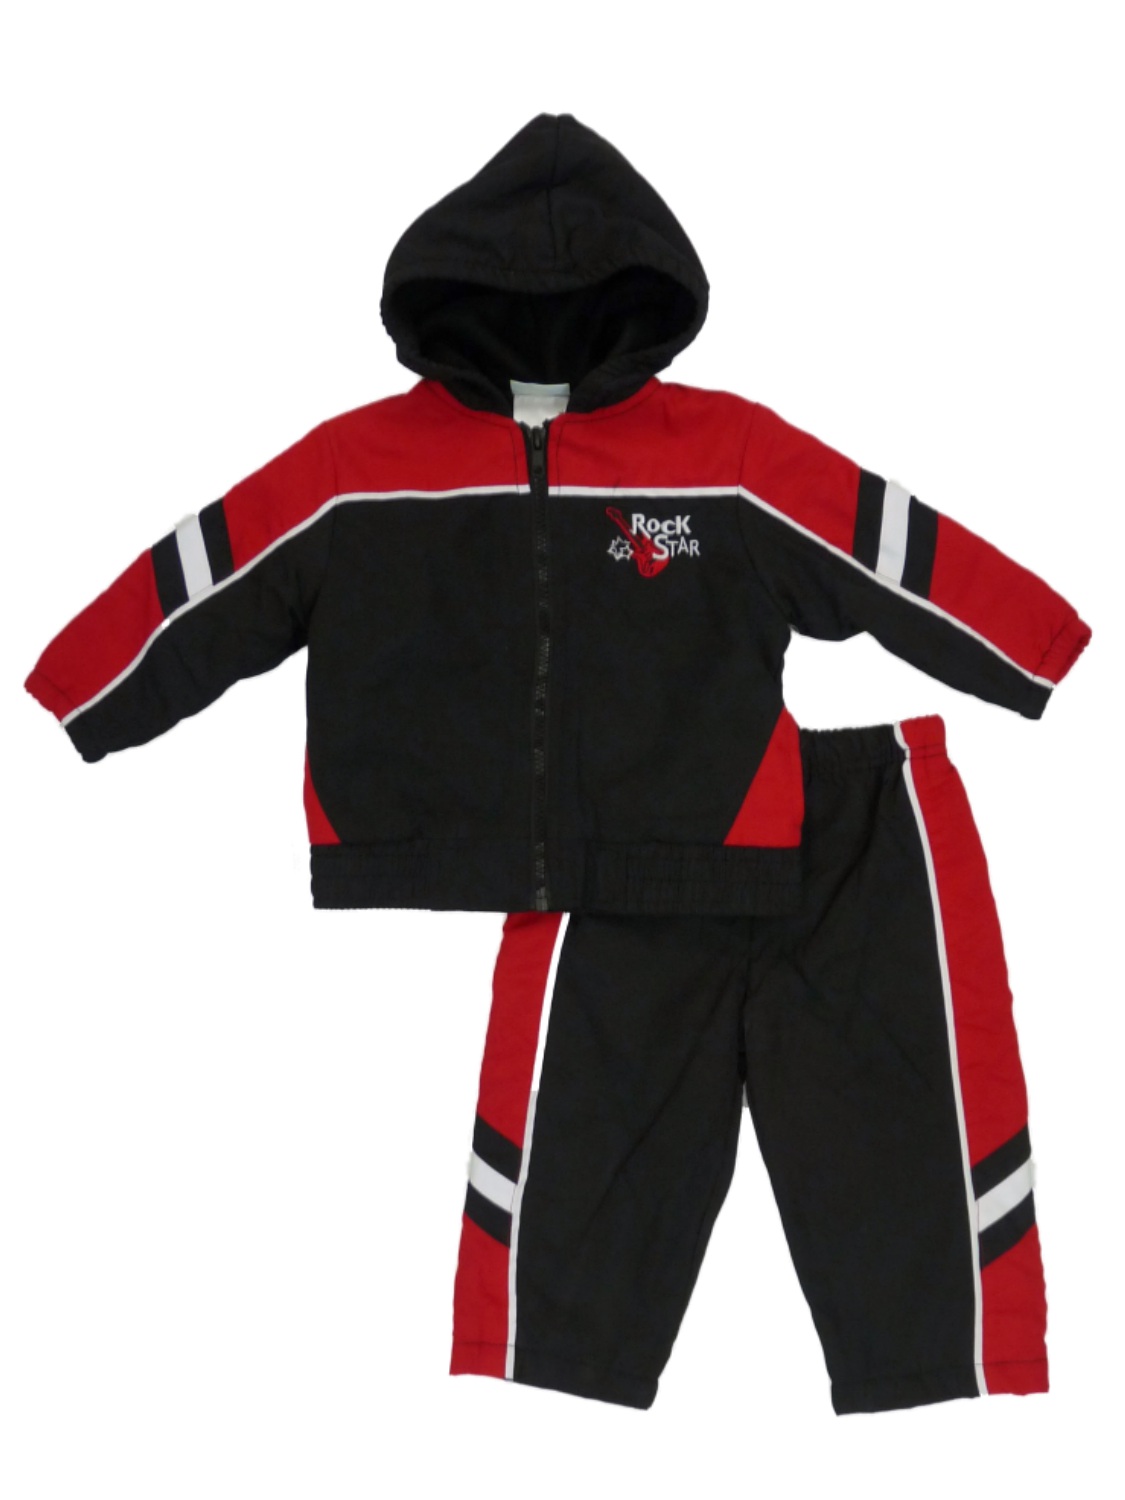 Al & Ray Infant Boys Black & Red Rock Star Jacket & Pants Track Suit Set 12m